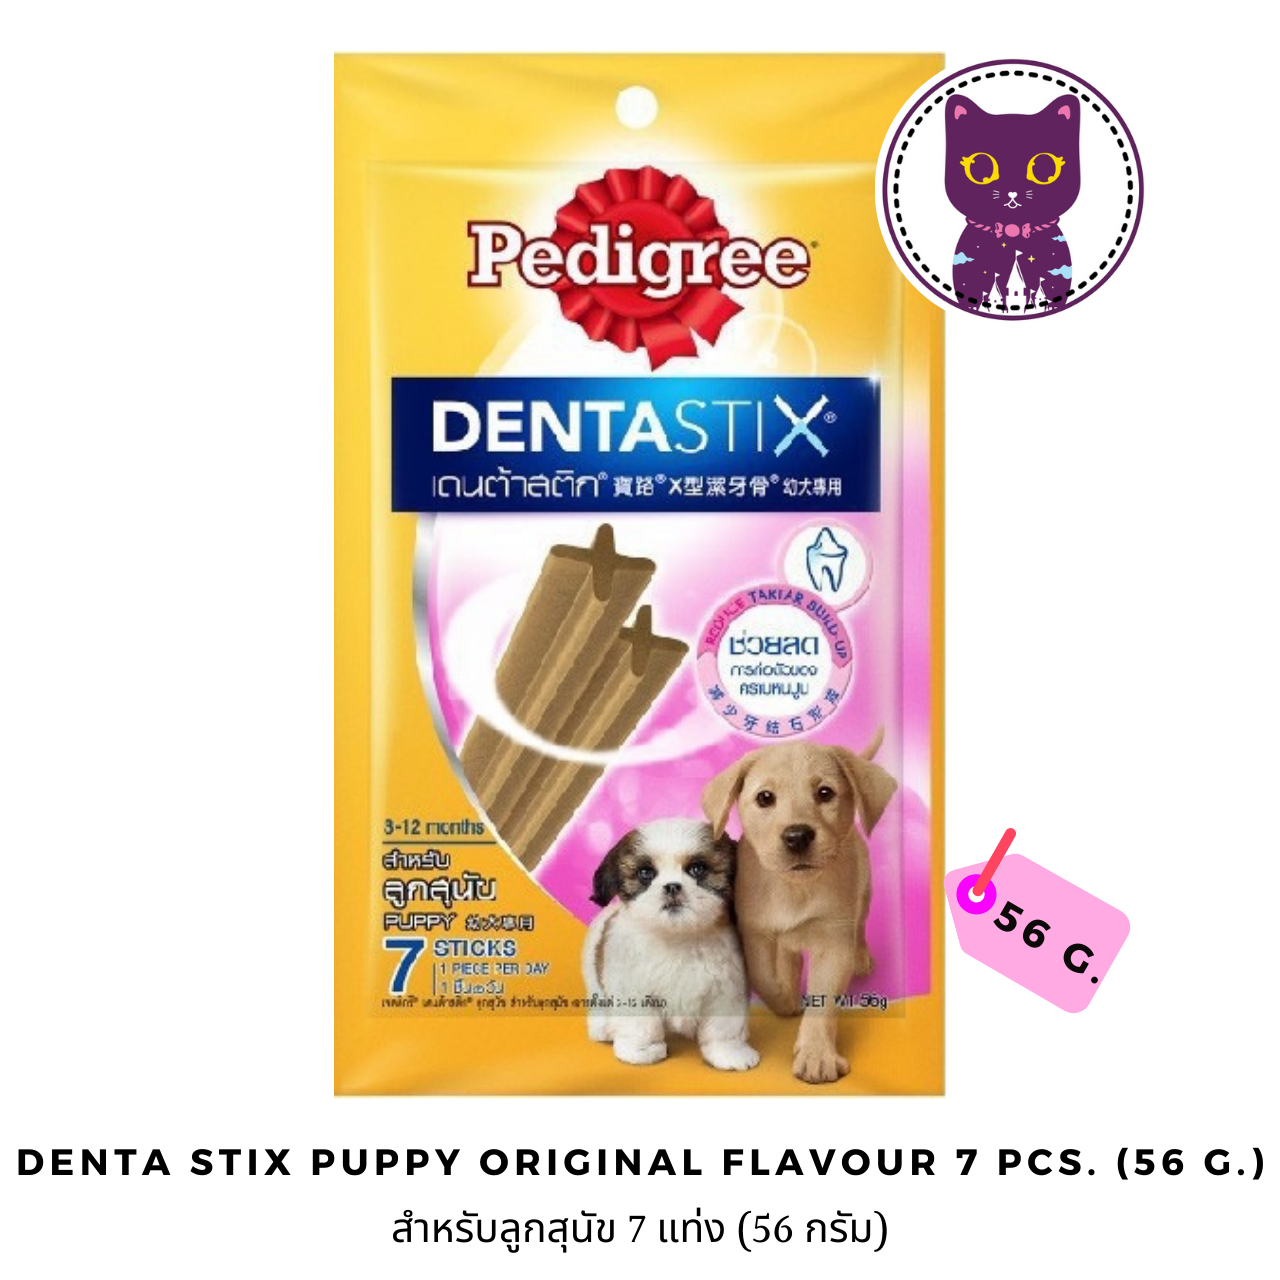 [WSP] Pedigree Denta Stix Original Flavor (Puppy) เพ็ดดิกรี ขนมขัดฟันสุนัขรูปตัว X สำหรับลูกสุนัข ออริจินอล 7 แท่ง